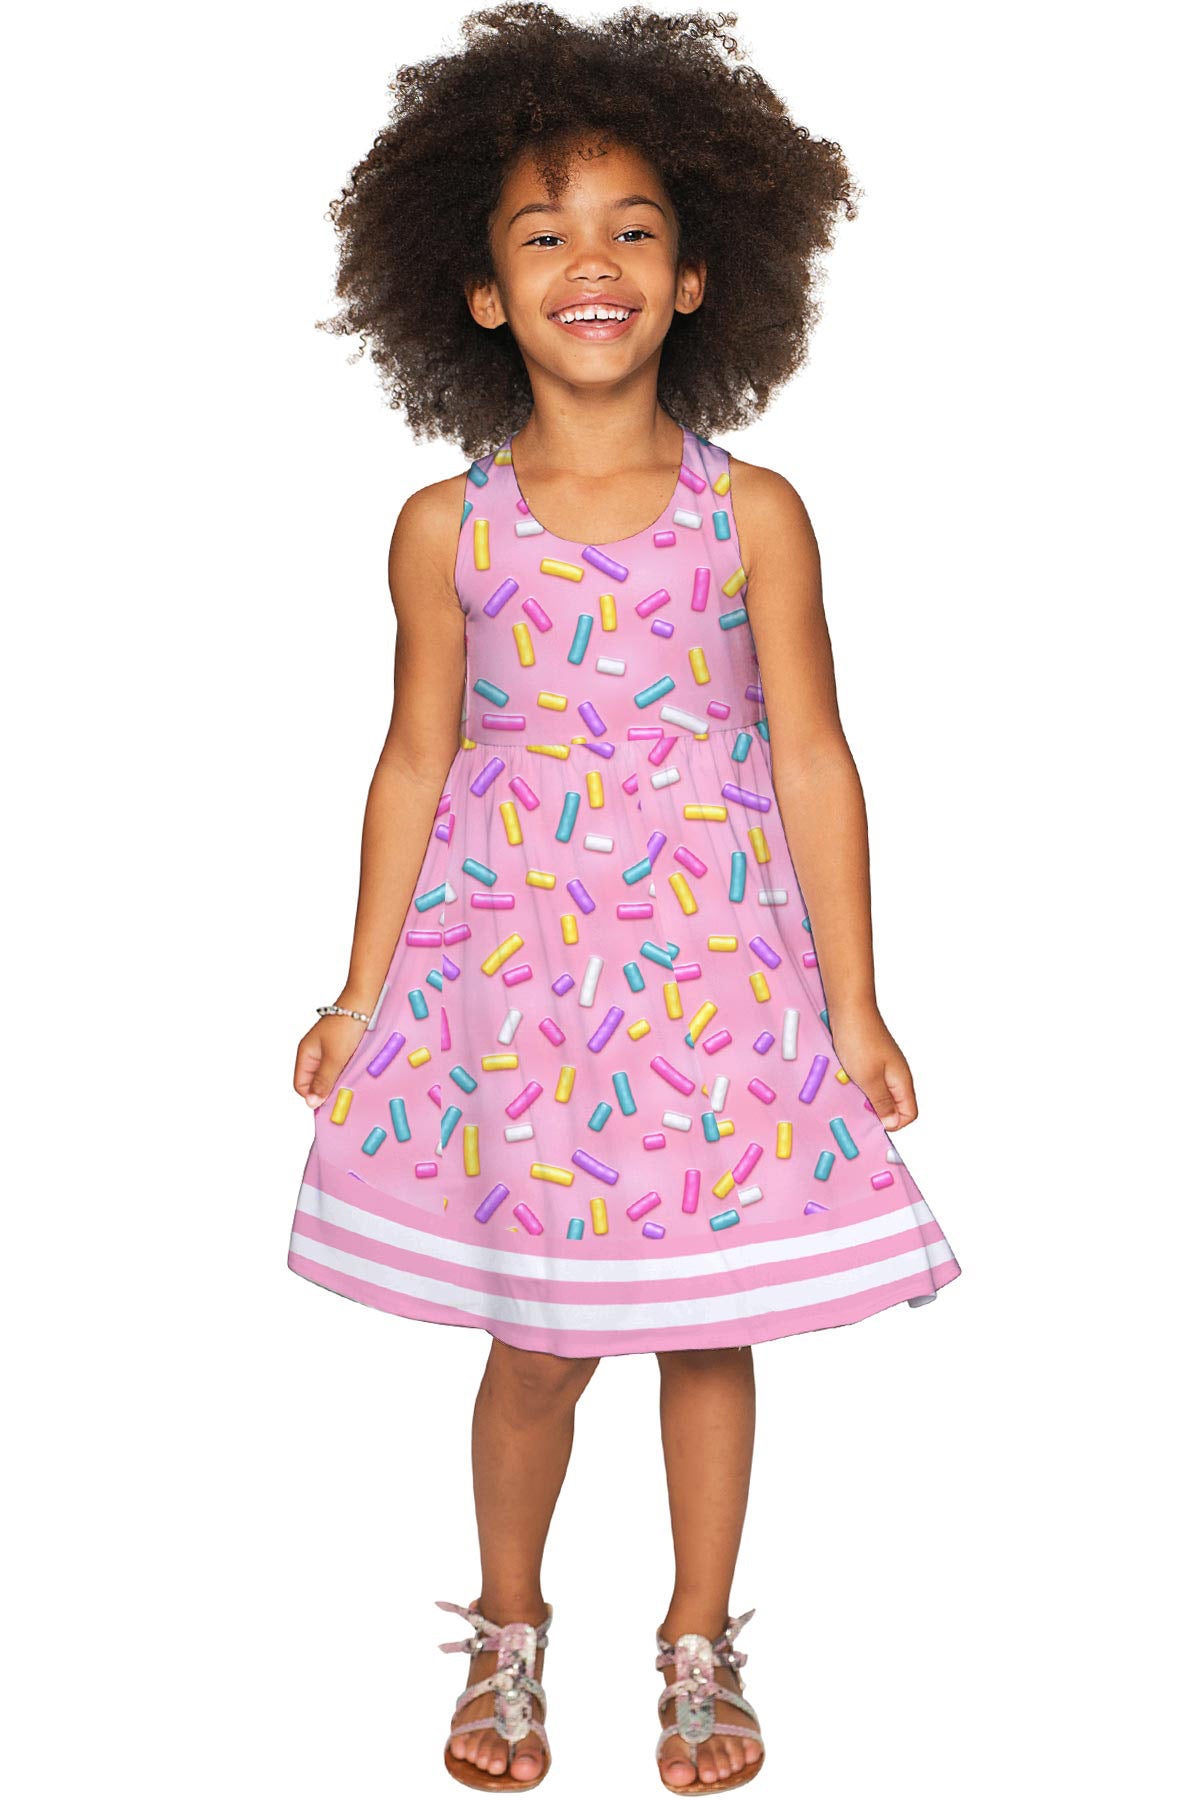 Sugar Baby Sanibel Pink Candy Print Cute Empire Waist Dress - Girls - Pineapple Clothing